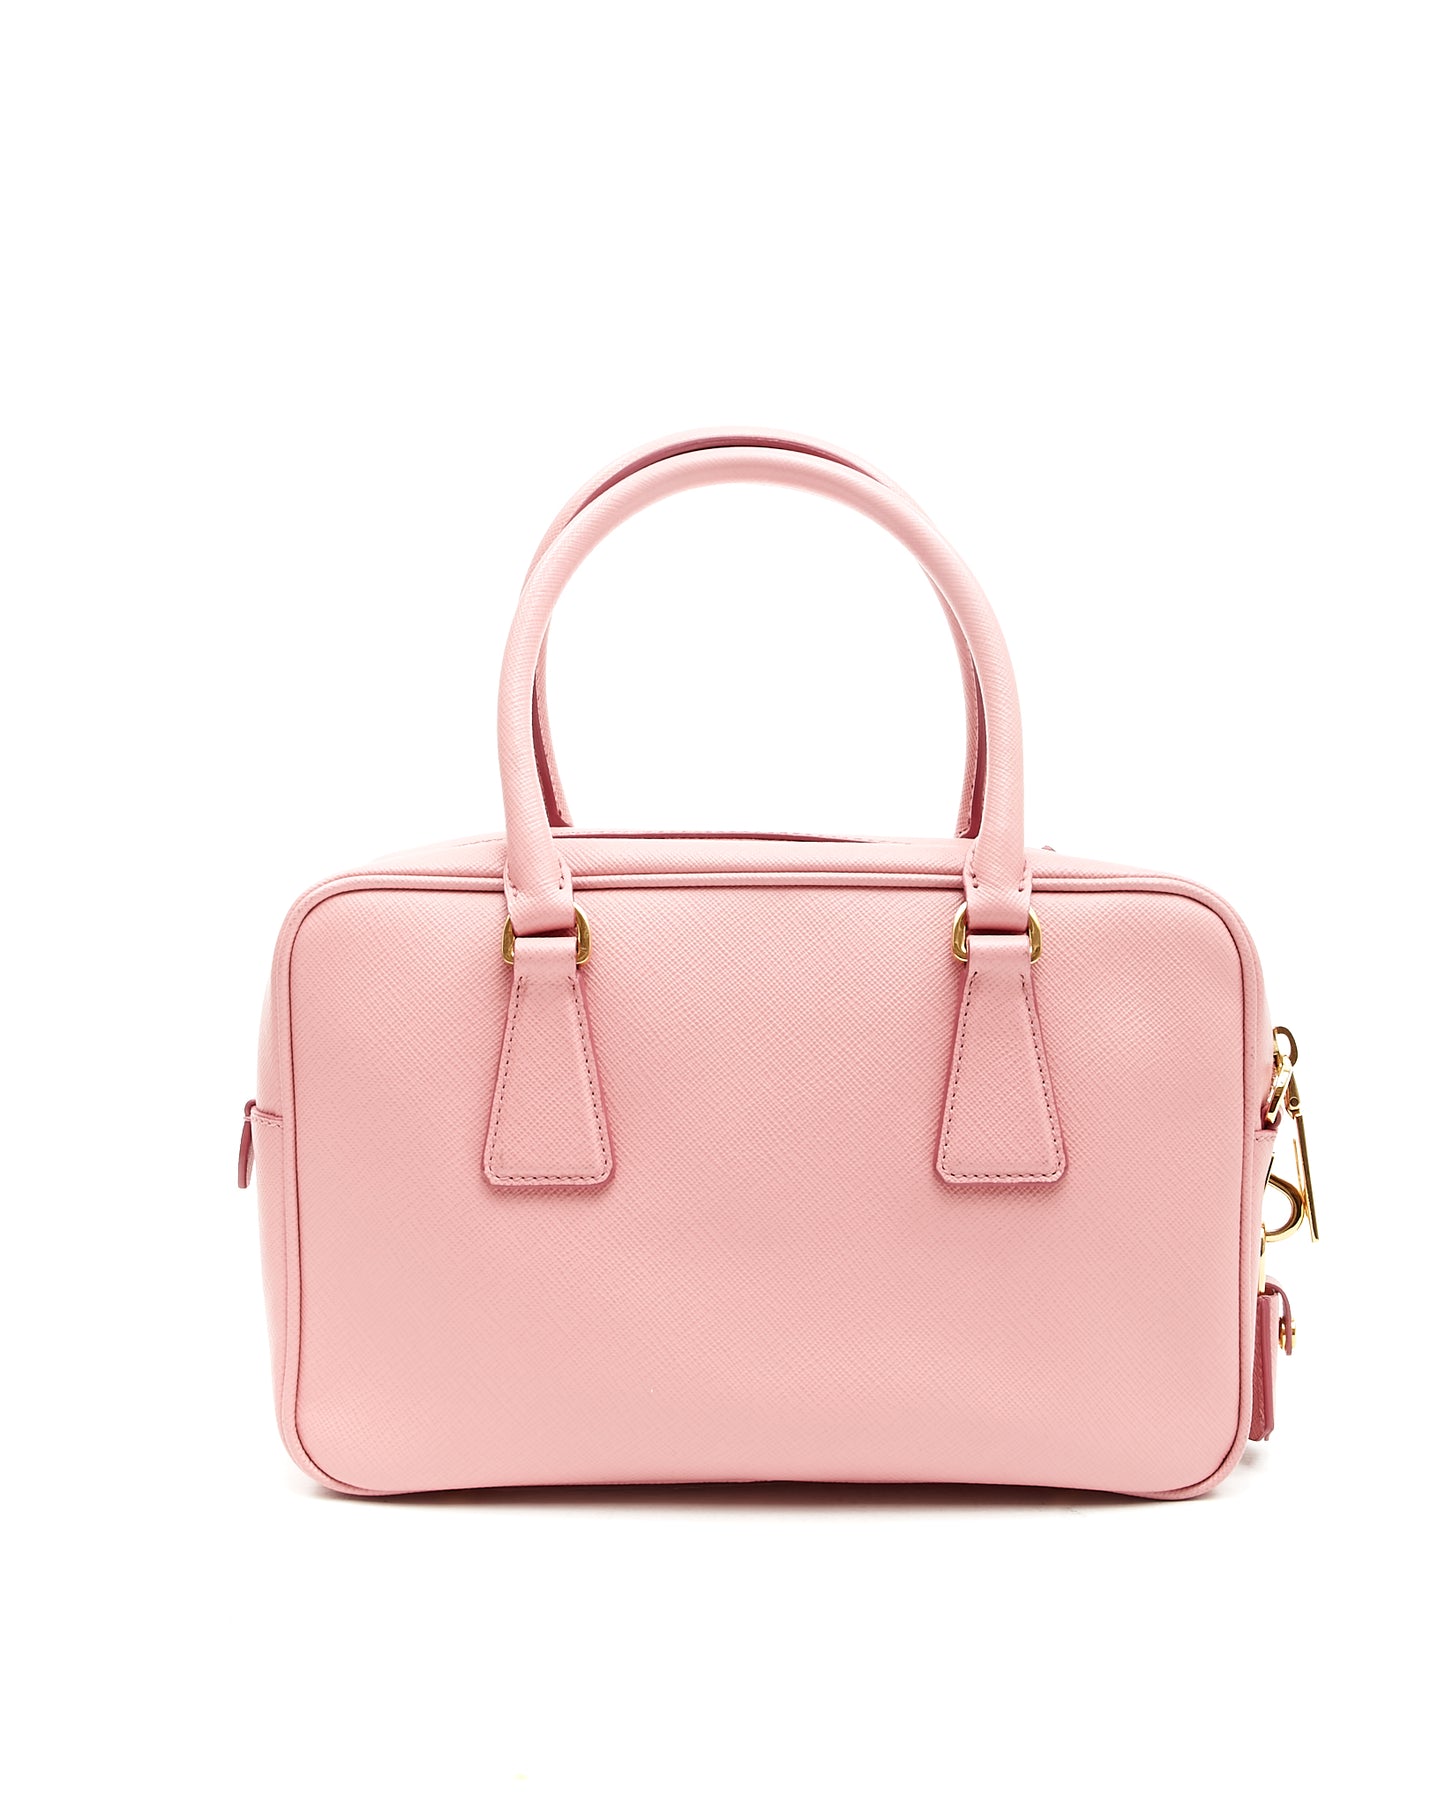 Prada Pink Saffiano Leather Bauletto Convertible Satchel Bag